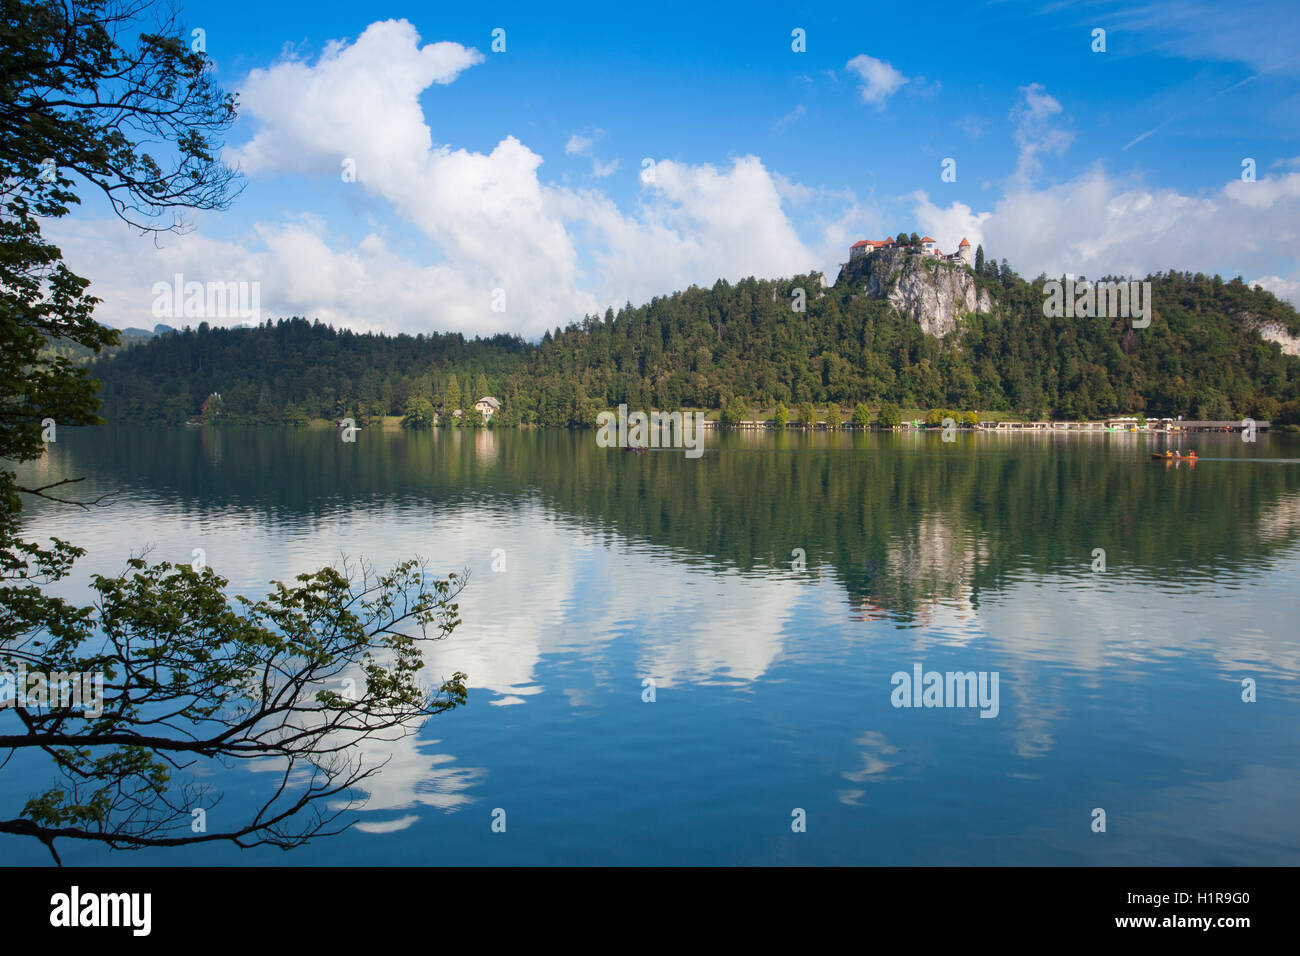 Berühmten Schloss am See Bled, Slowenien Stockfoto